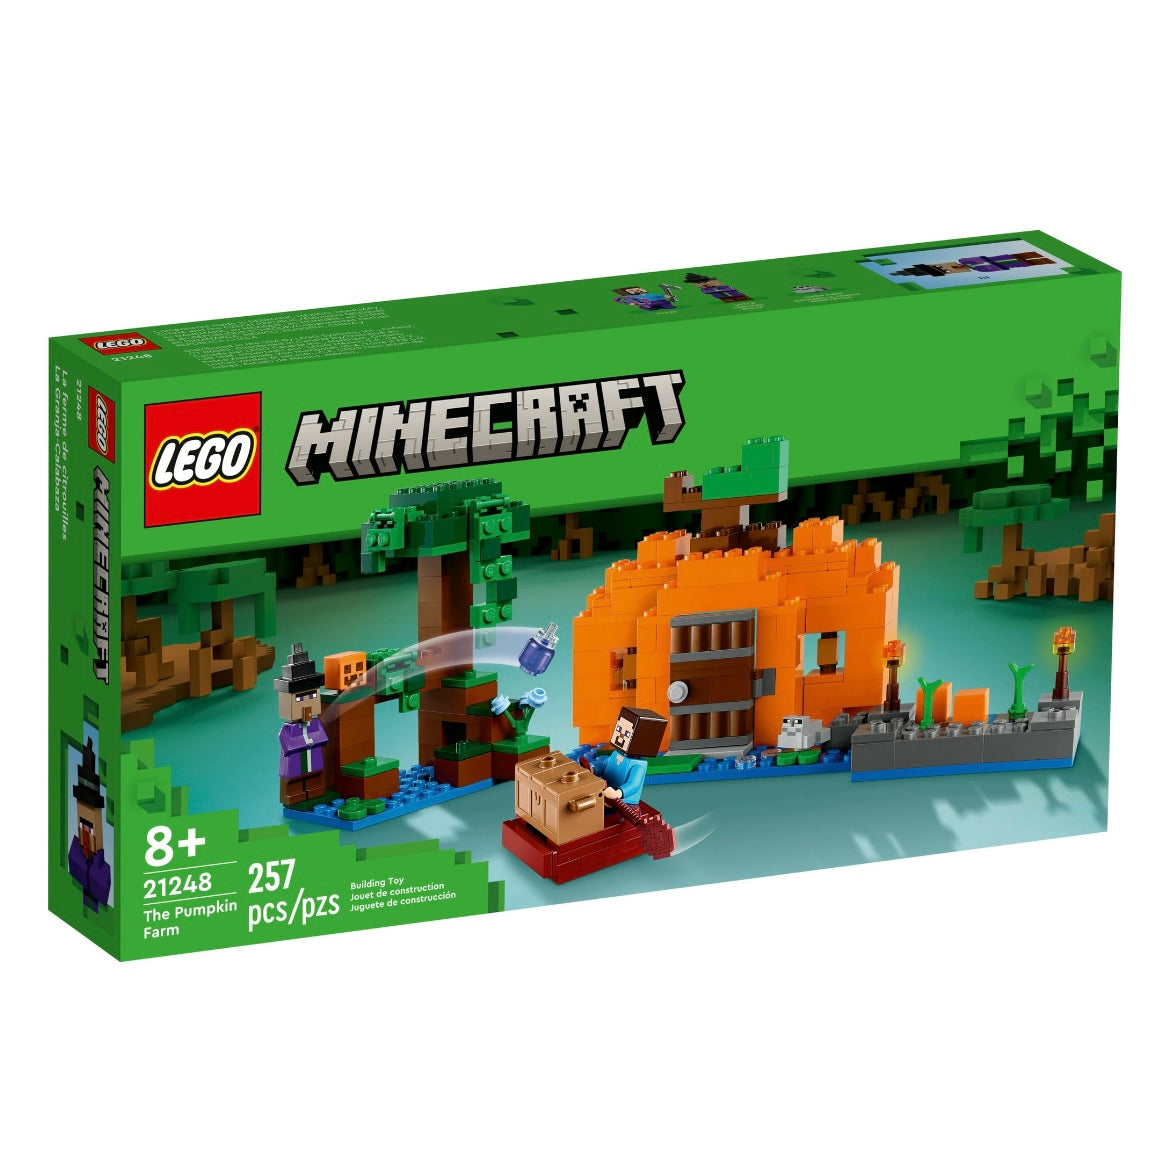 Lego and Mega Building Blocks Sets